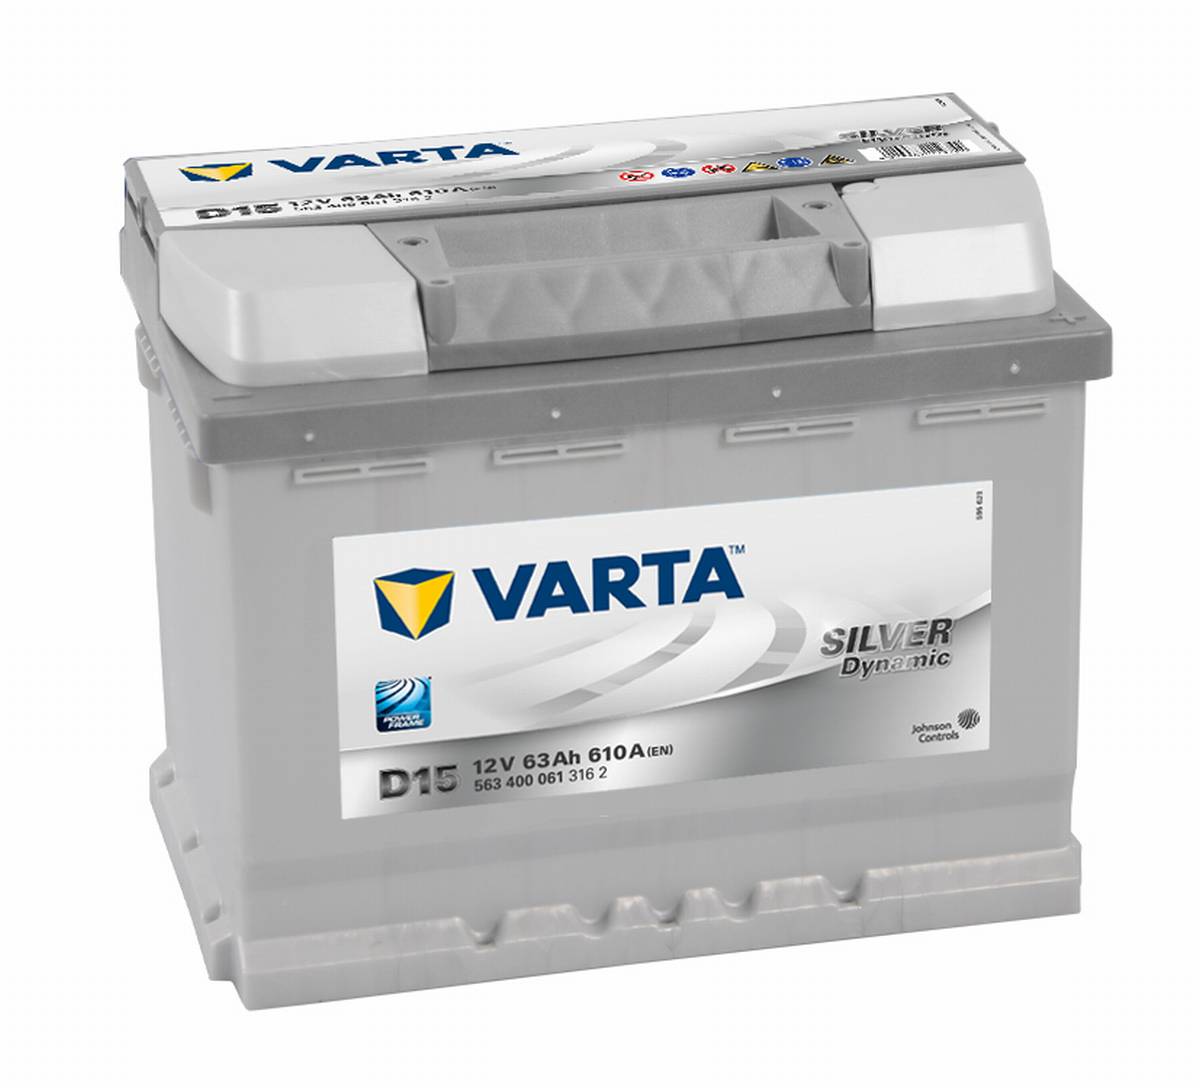 VARTA D15 Silver Dynamic 12V 63Ah 610A Autobatterie 563 400 061